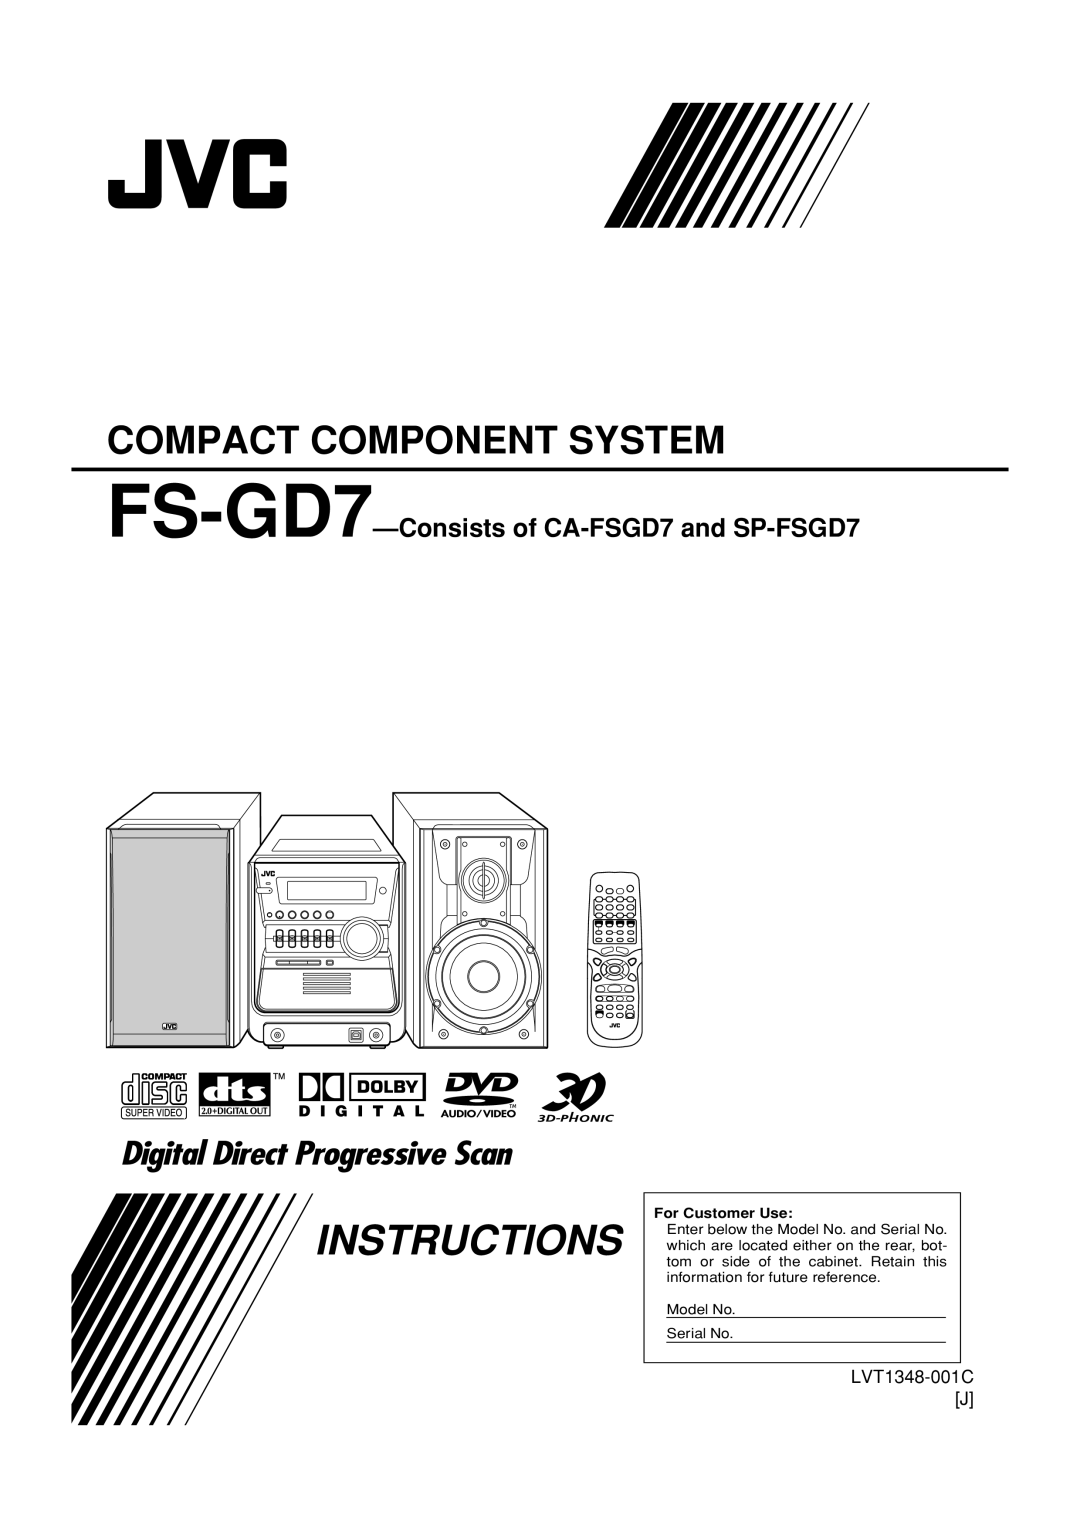 JVC manual Instructions, Compact Component System, FS-GD7-Consistsof CA-FSGD7and SP-FSGD7, LVT1348-001CJ, D I G I T A L 